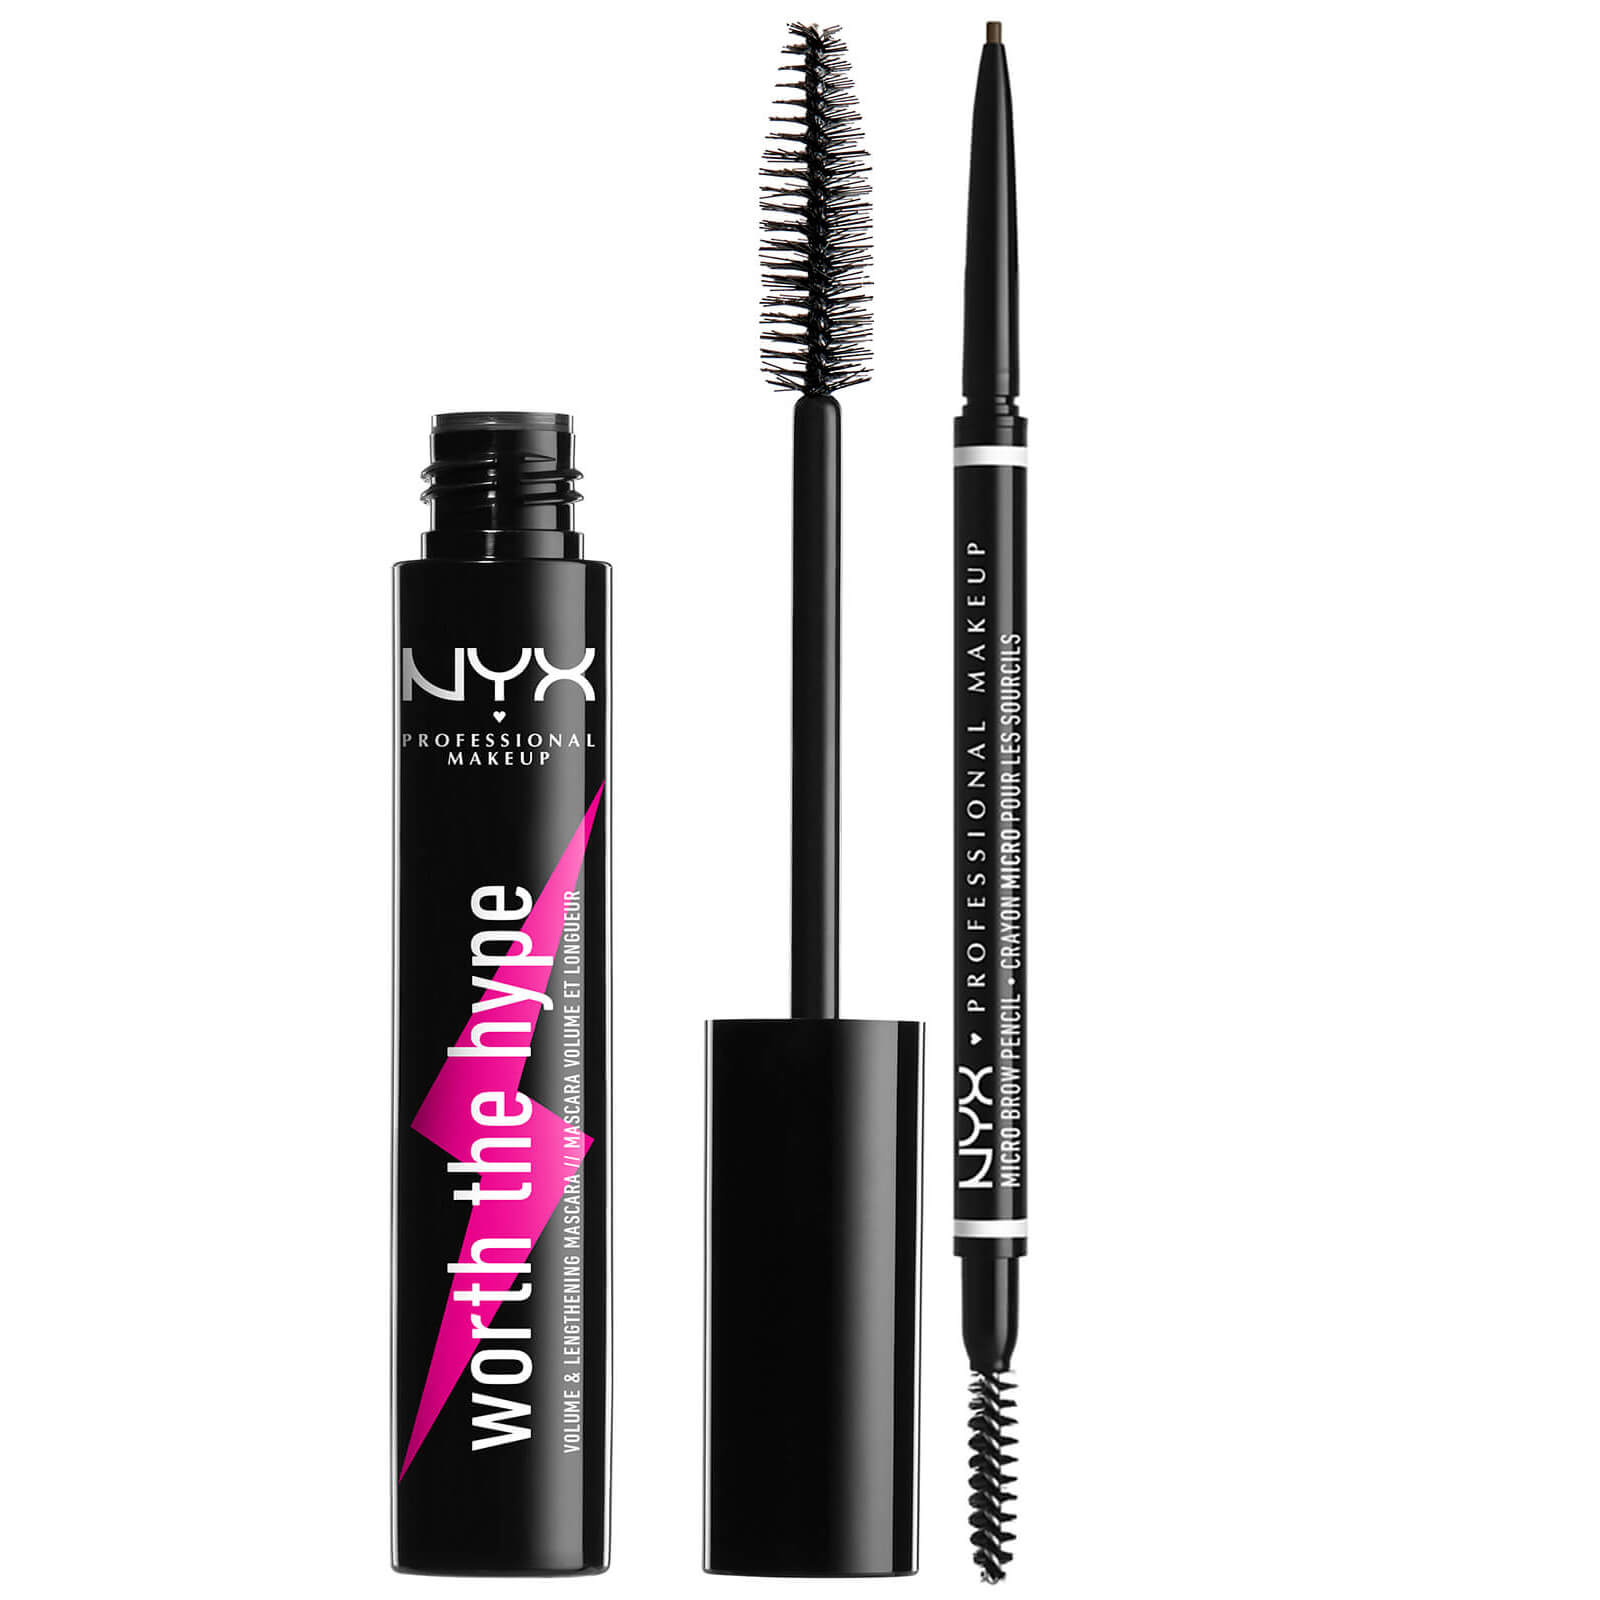 Image of NYX Professional Makeup Micro Eyebrow Pencil and Black Volumizing Mascara Duo